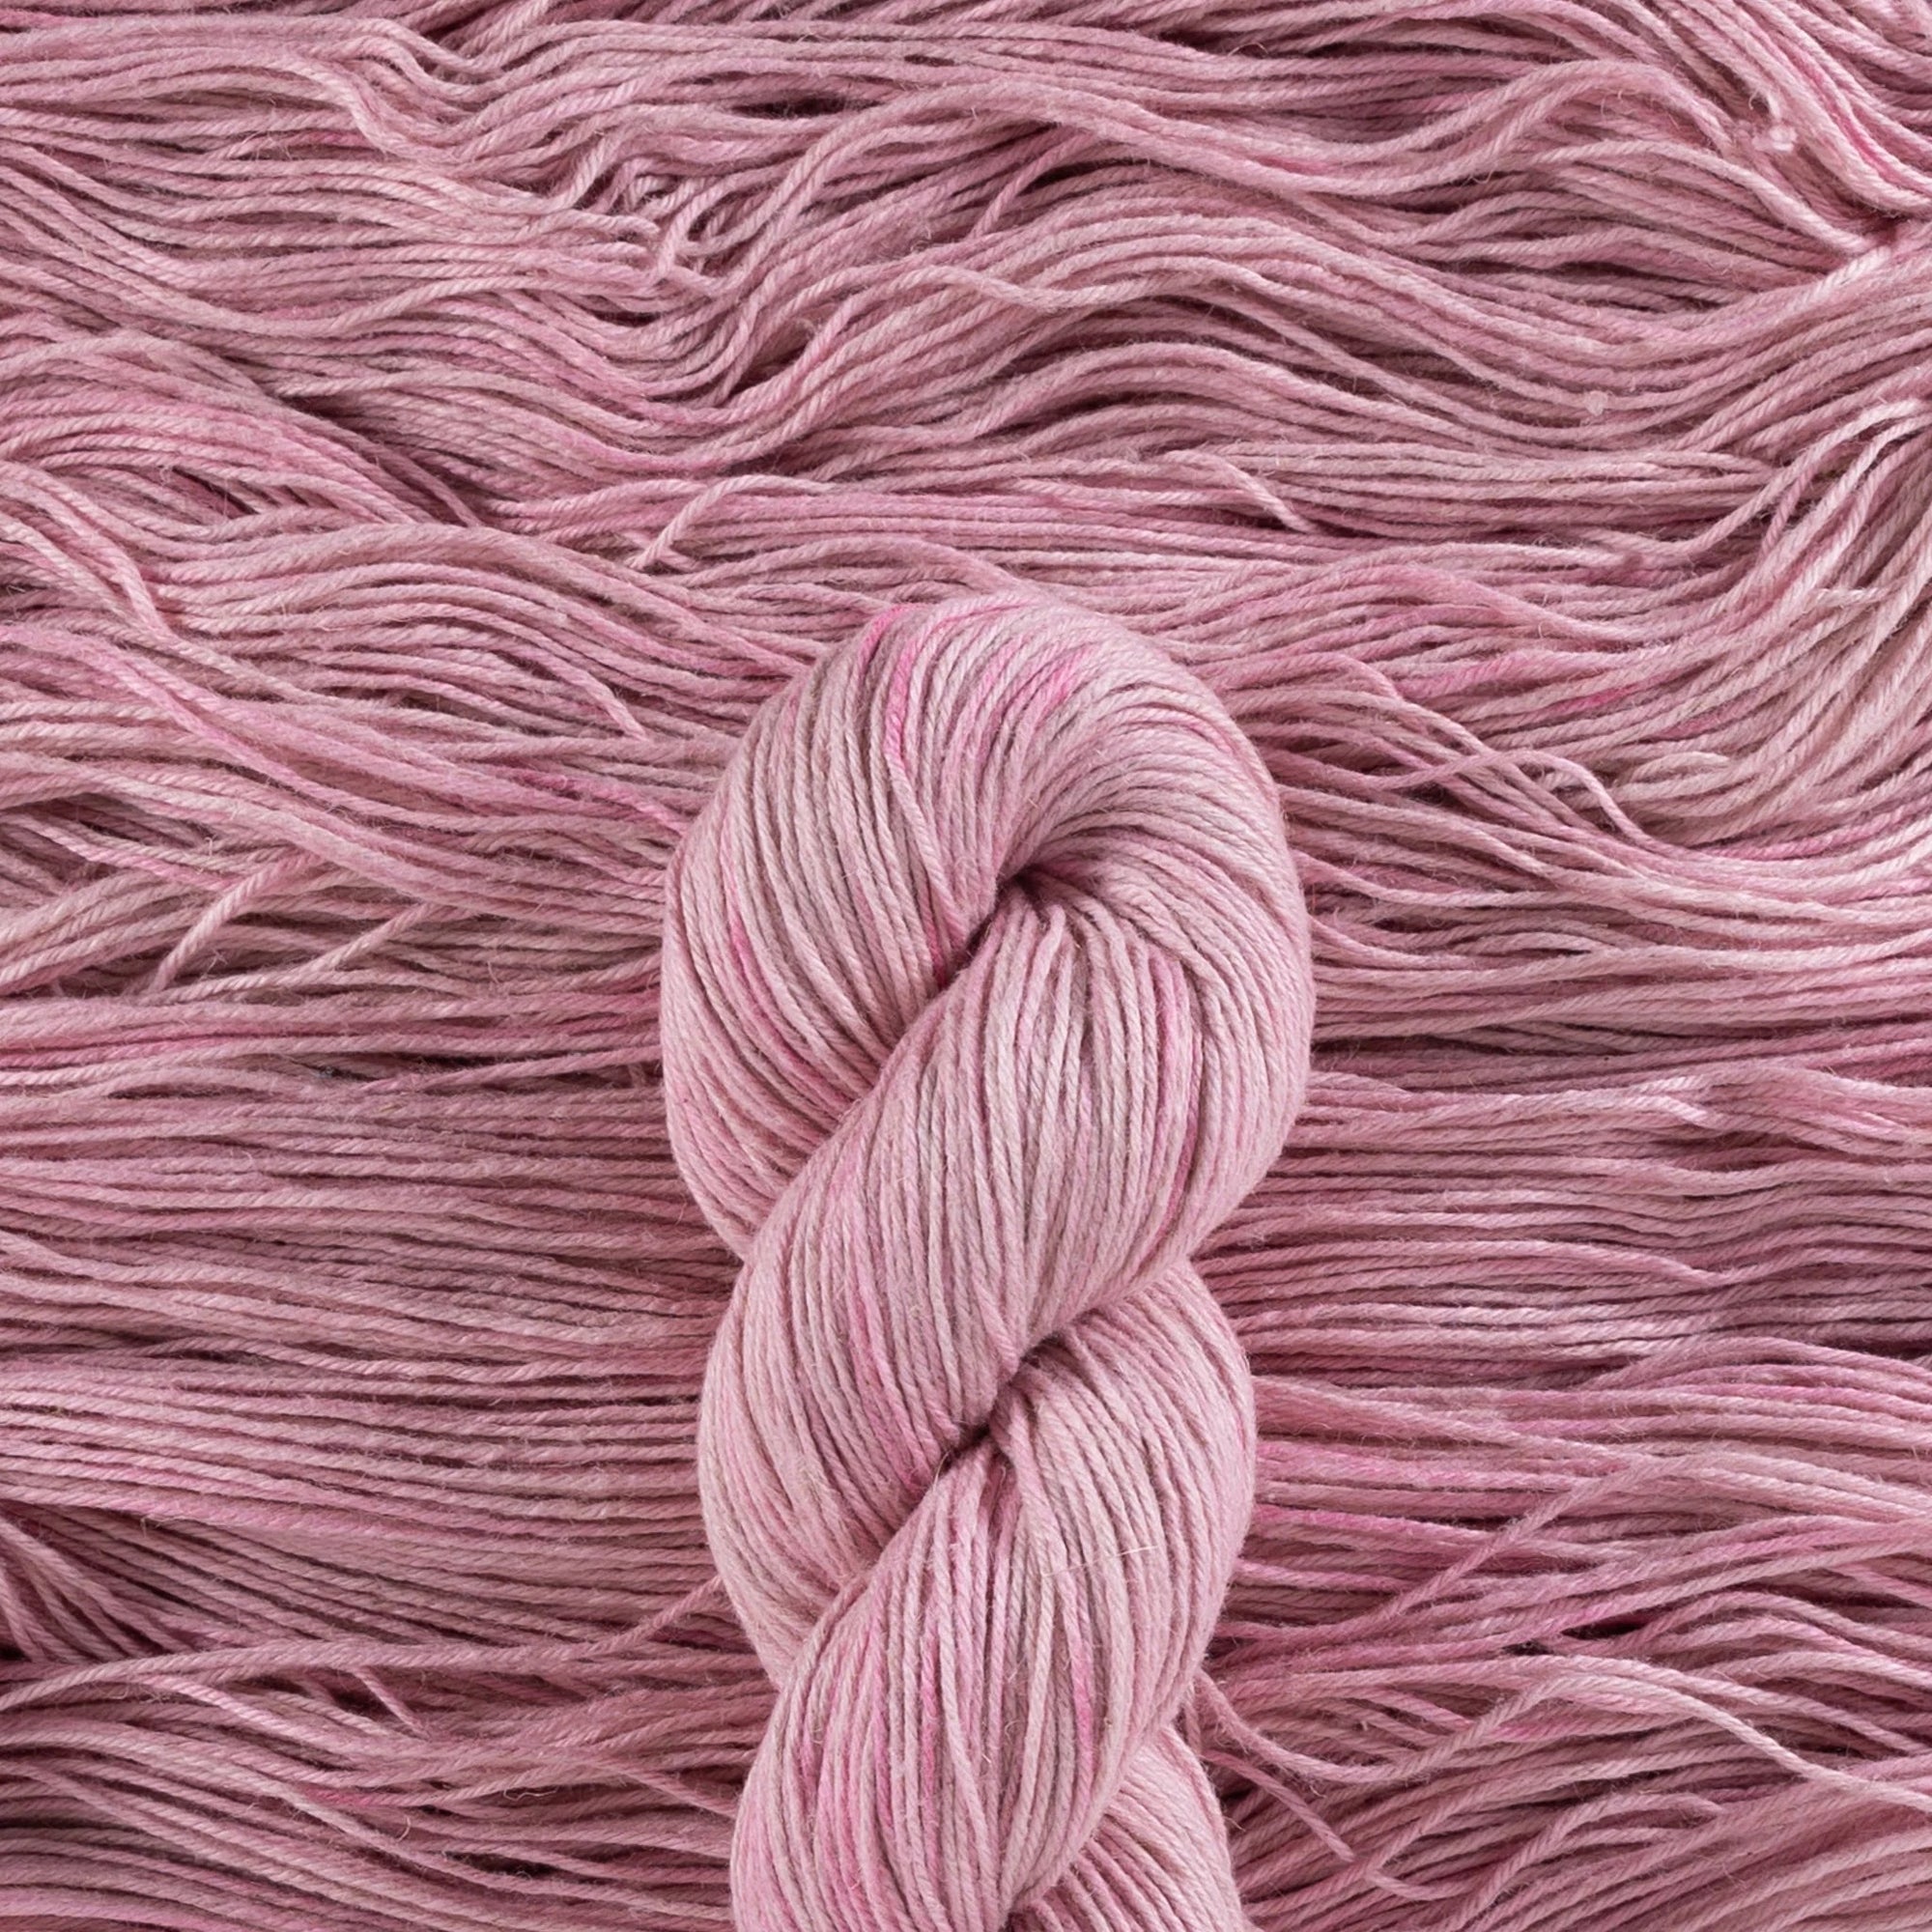 Ritual Dyes Undine DK - Ritual Dyes - Peony - The Little Yarn Store